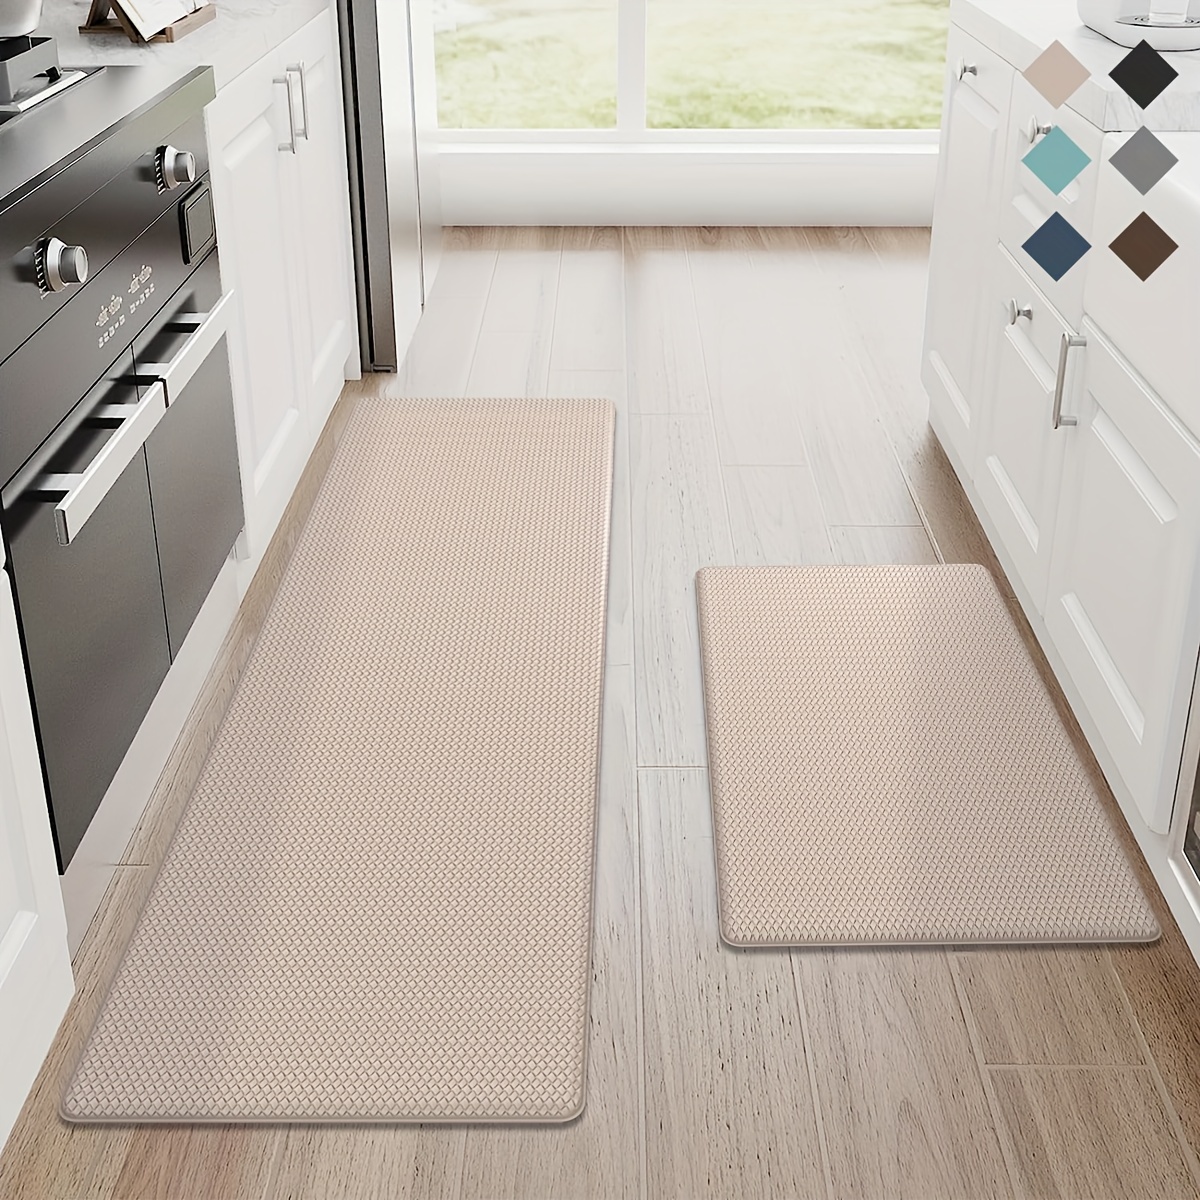 3/4 Thick Anti Fatigue Mats for Kitchen Floor,17.32''x28'' Kitchen